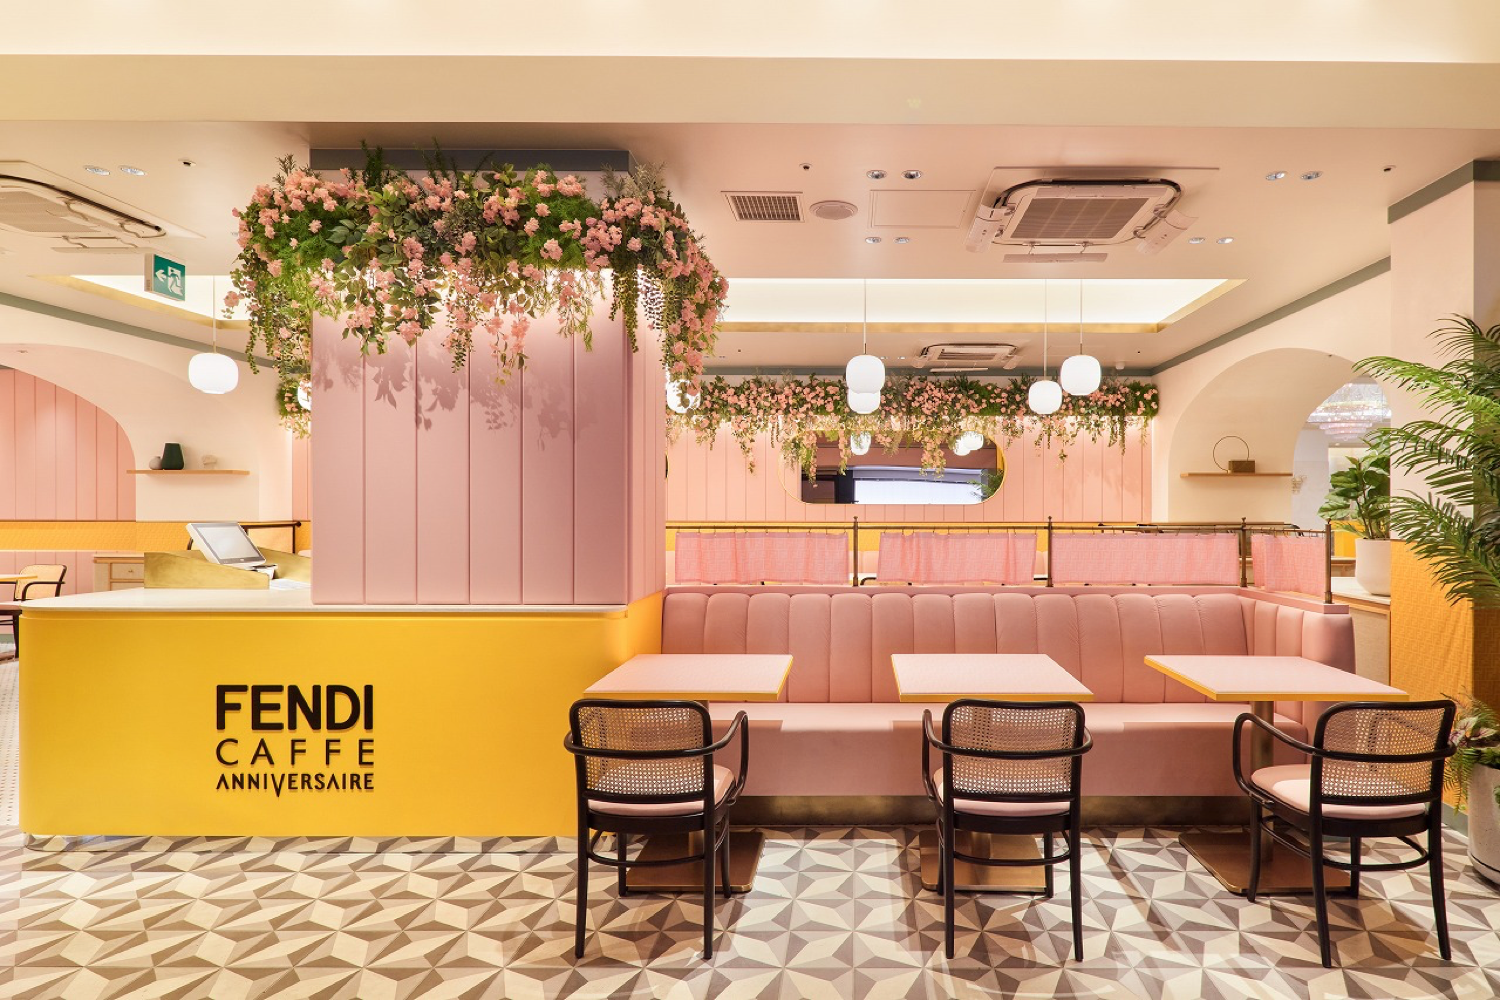 Tokyo: Fendi Caffè by Anniversaire opening